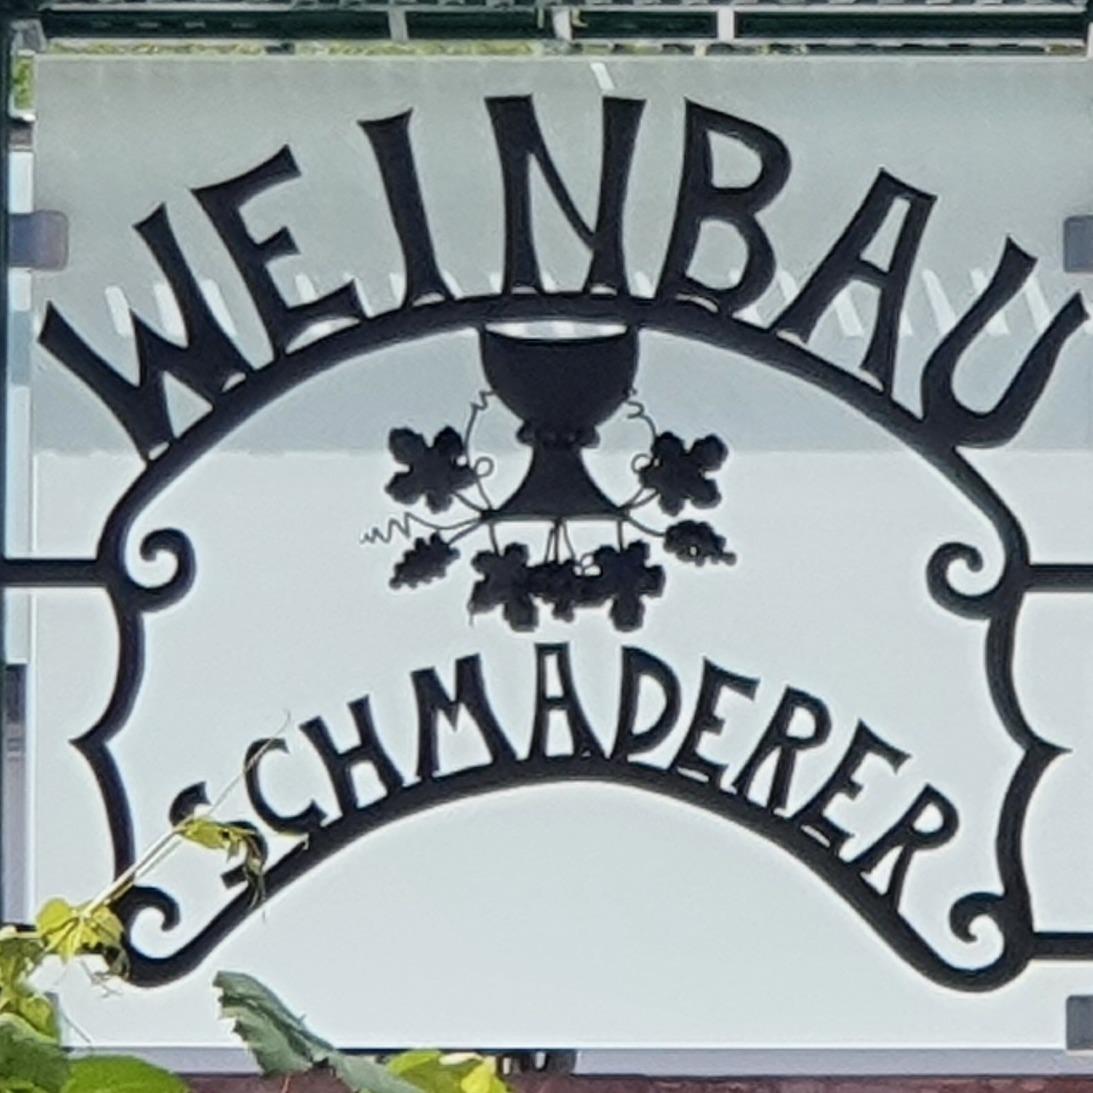 Heuriger Schmaderer Logo